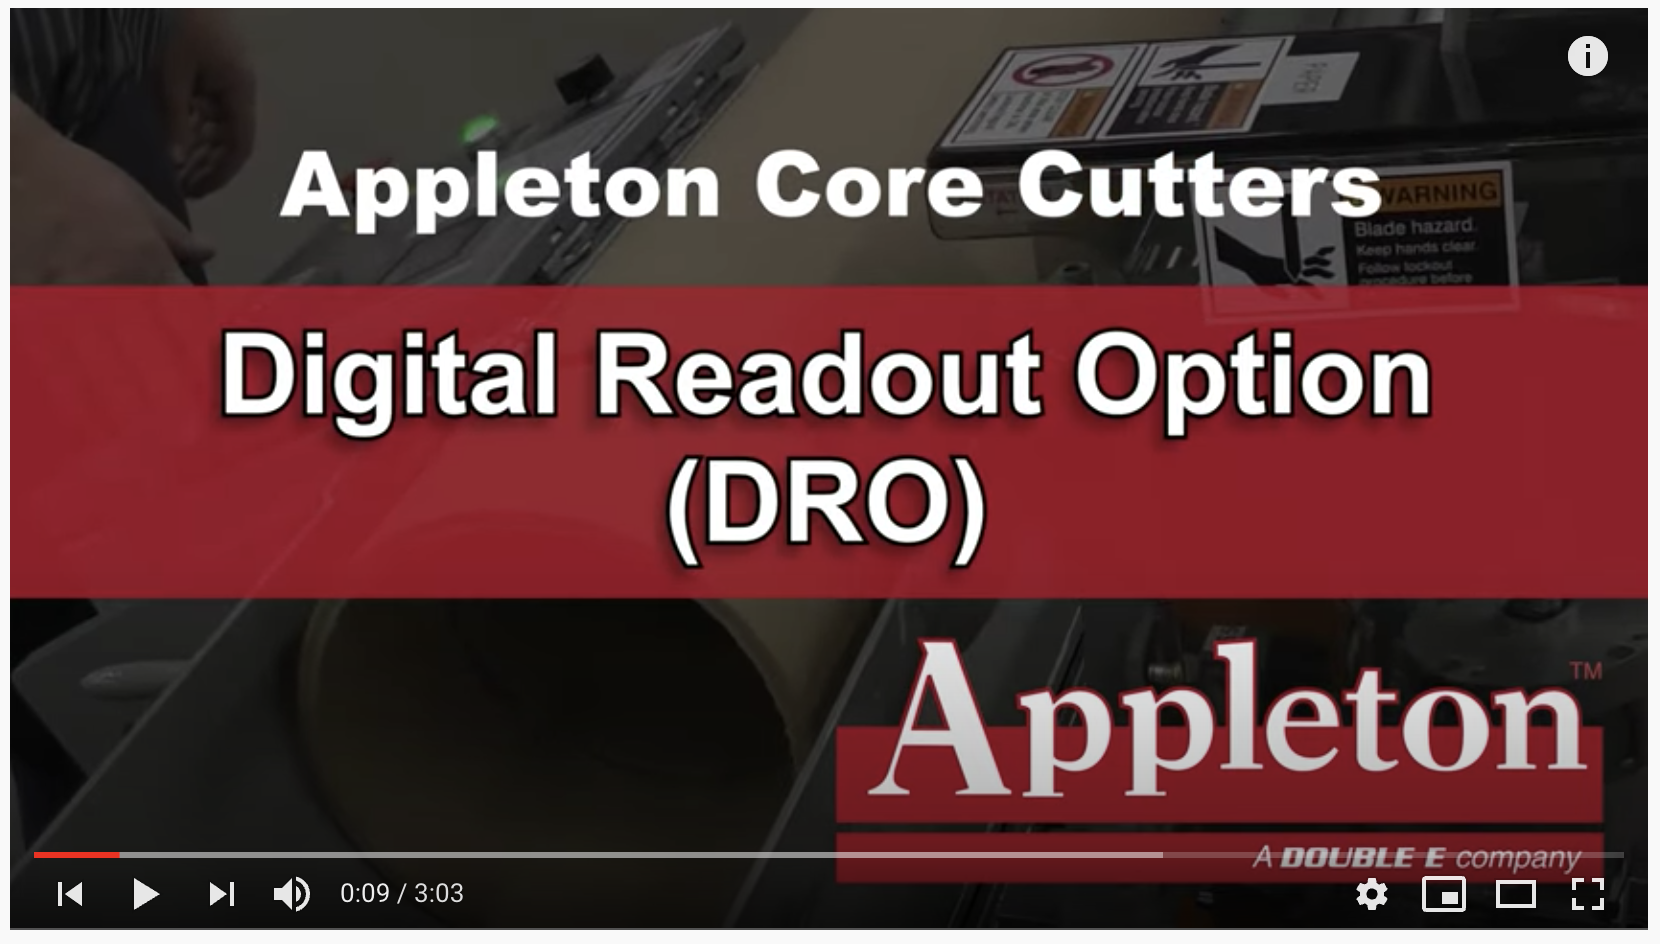 DRO - Digital Readout Option